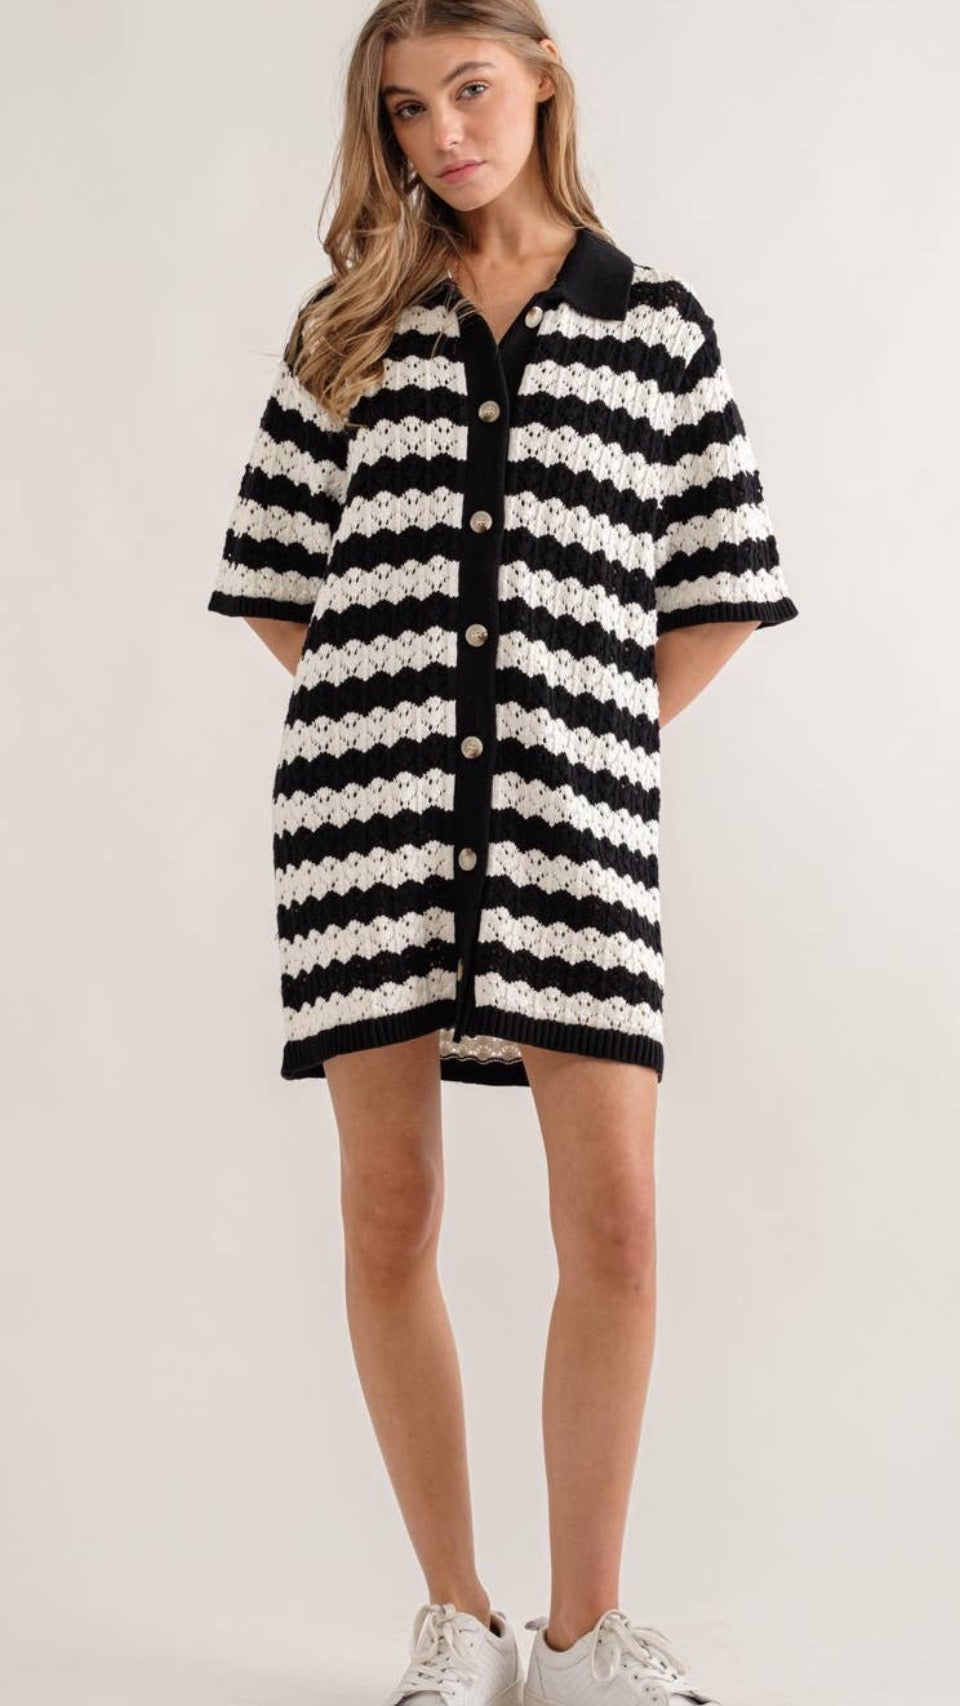 Black And White Crochet Button Down Dress